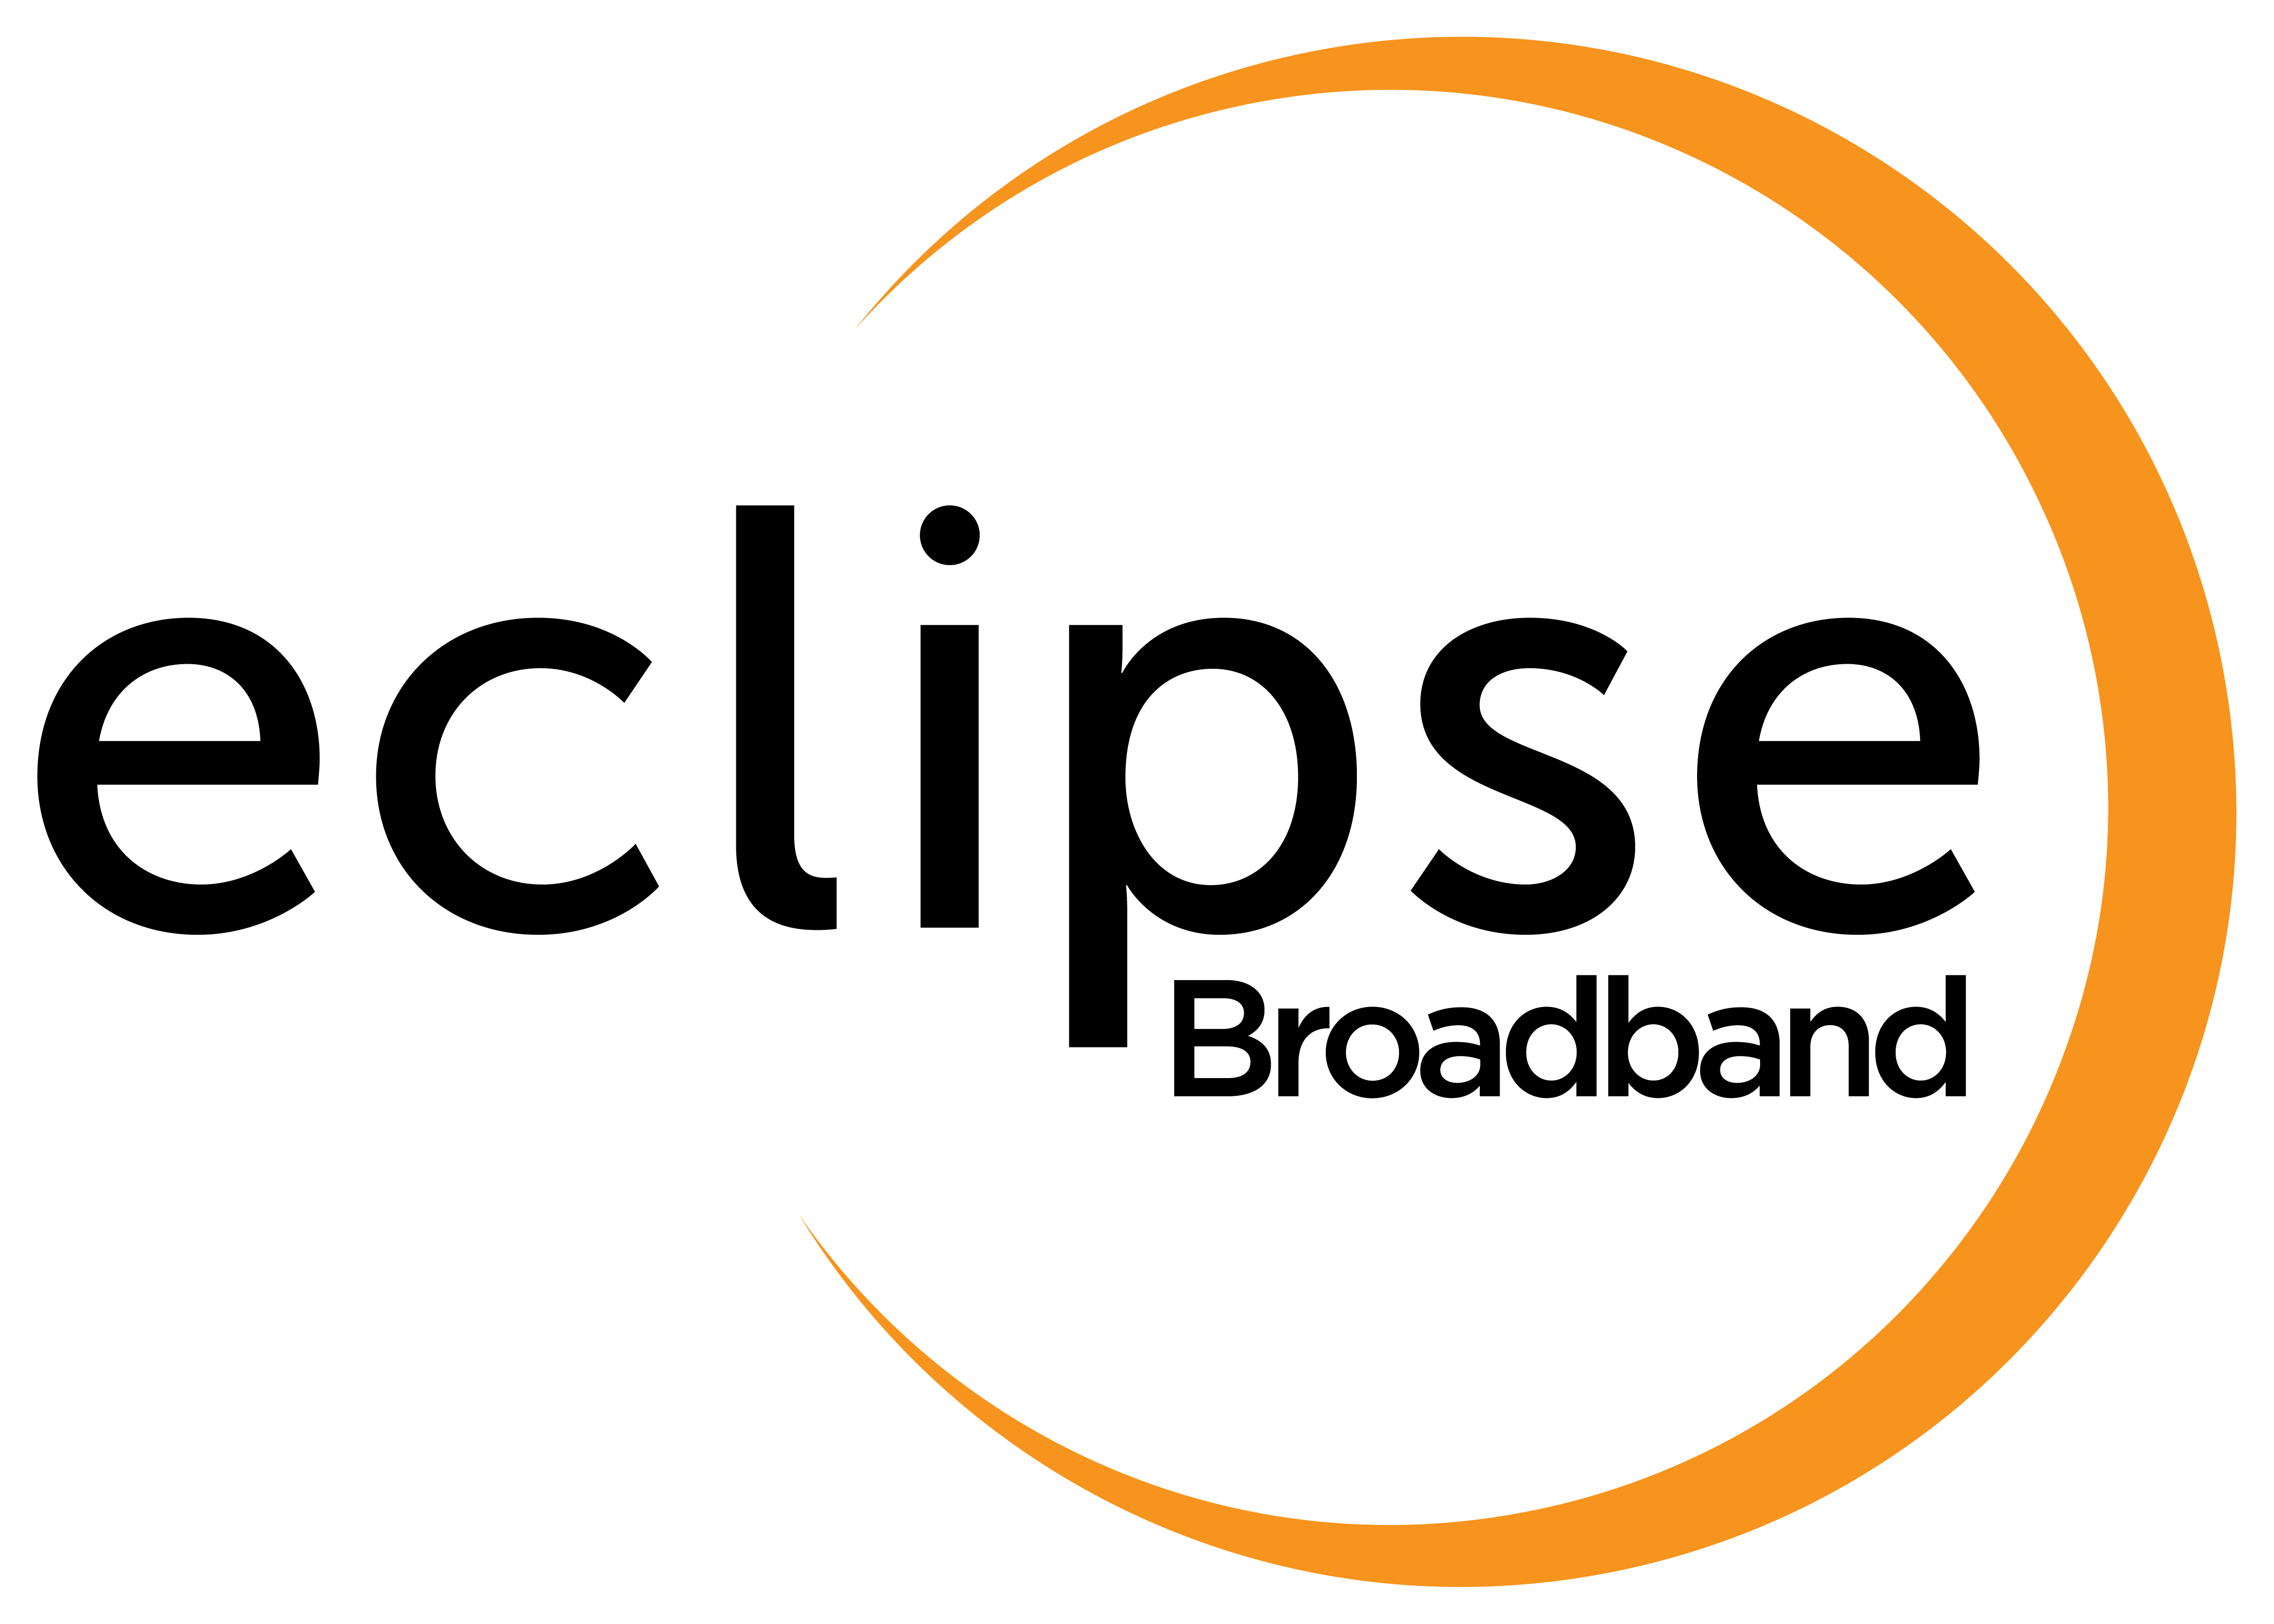 Eclipse broadband logo